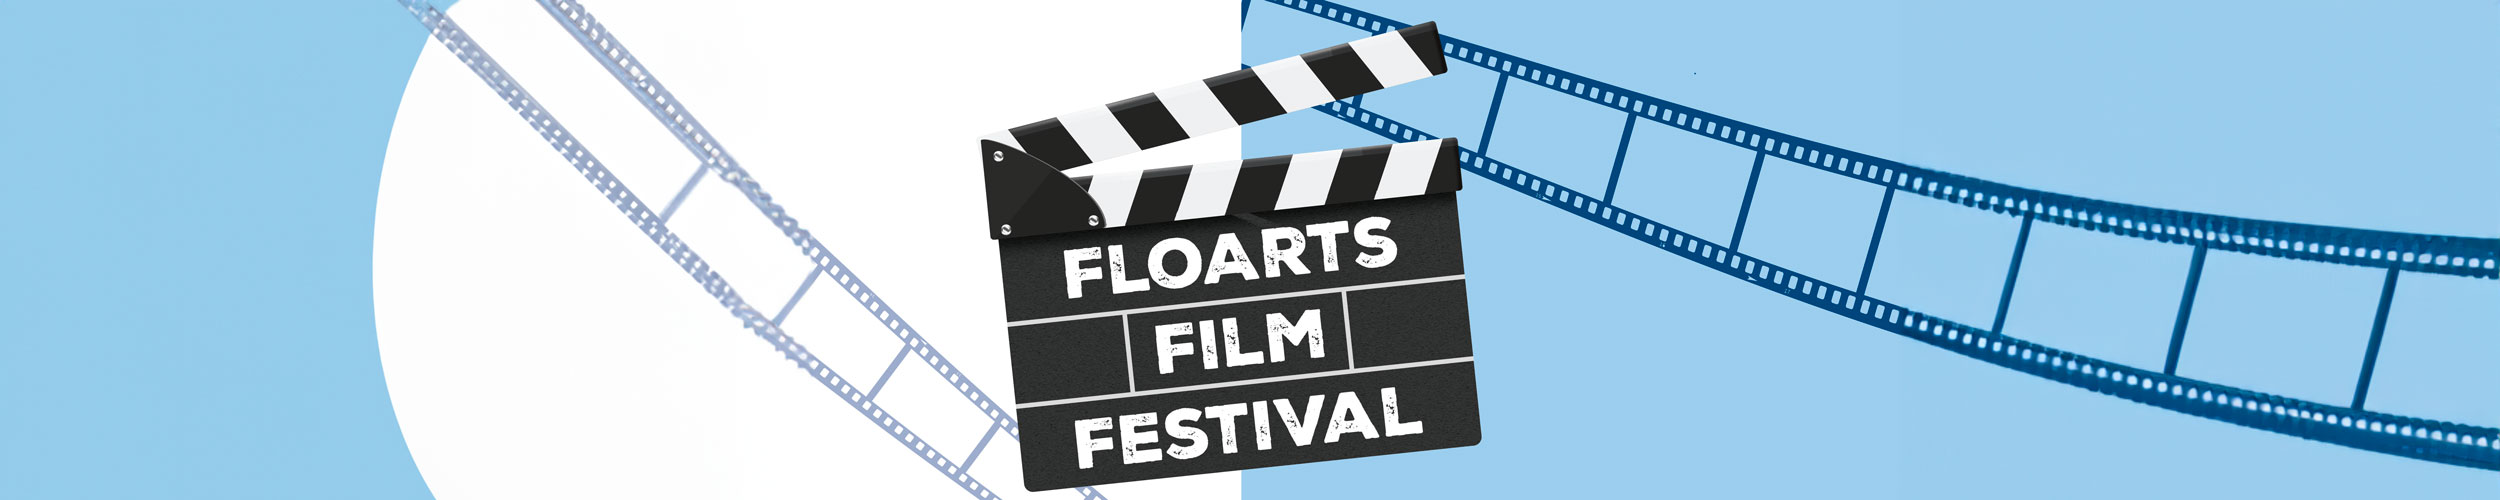 Florida School of the Arts Film Festival